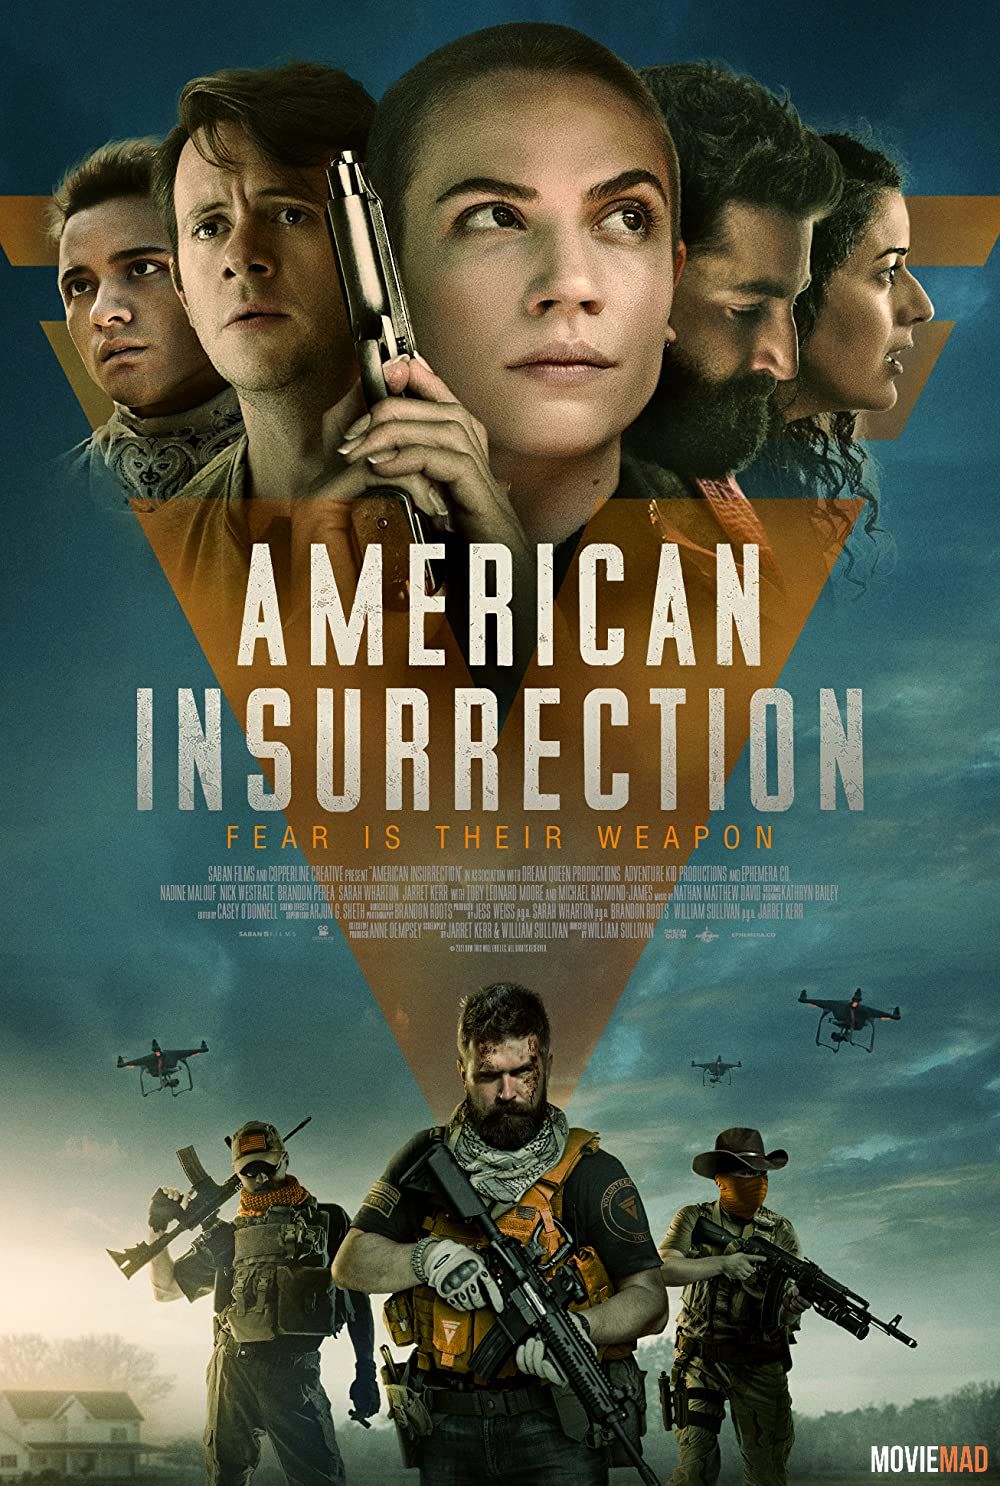 American Insurrection 2021 English AMZN HDRip Full Movie 720p 480p